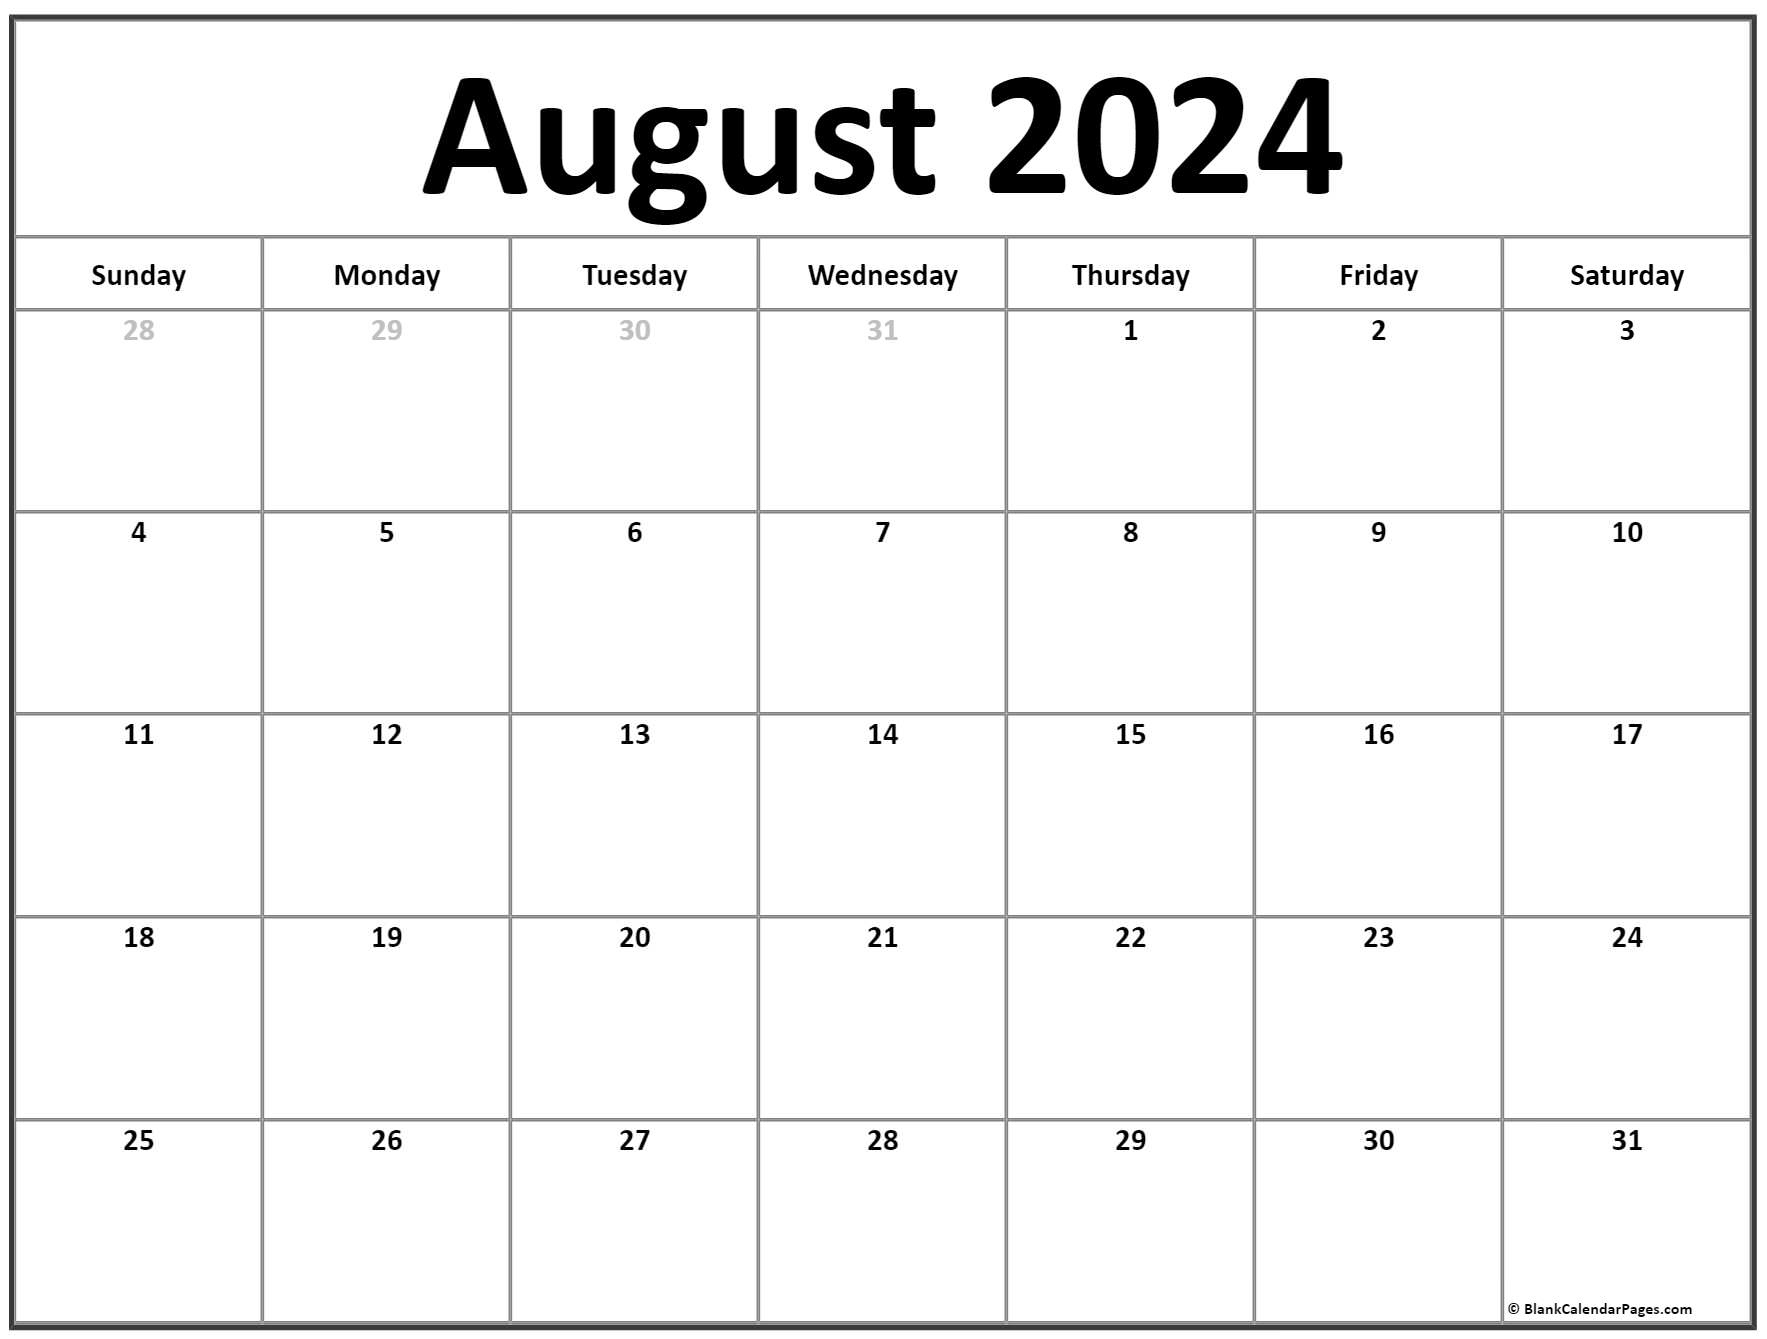 August 2024 Calendar | Free Printable Calendar intended for Free Printable August 2024 Calendar